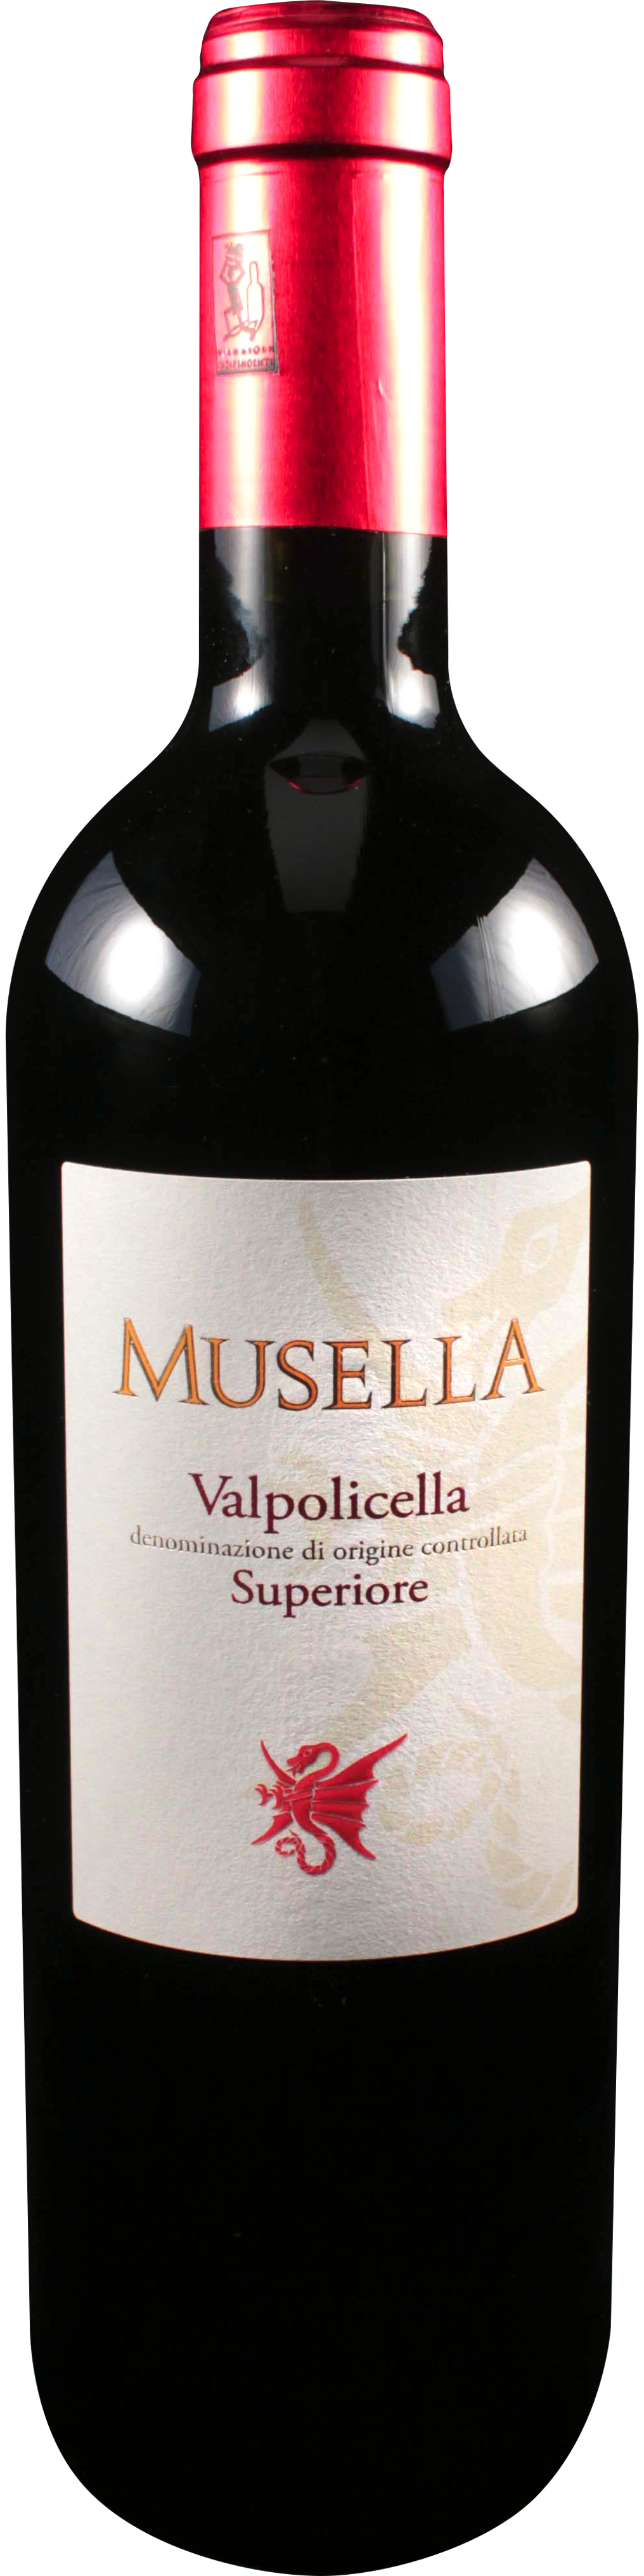 Bottle shot of 2013 Valpolicella Superiore